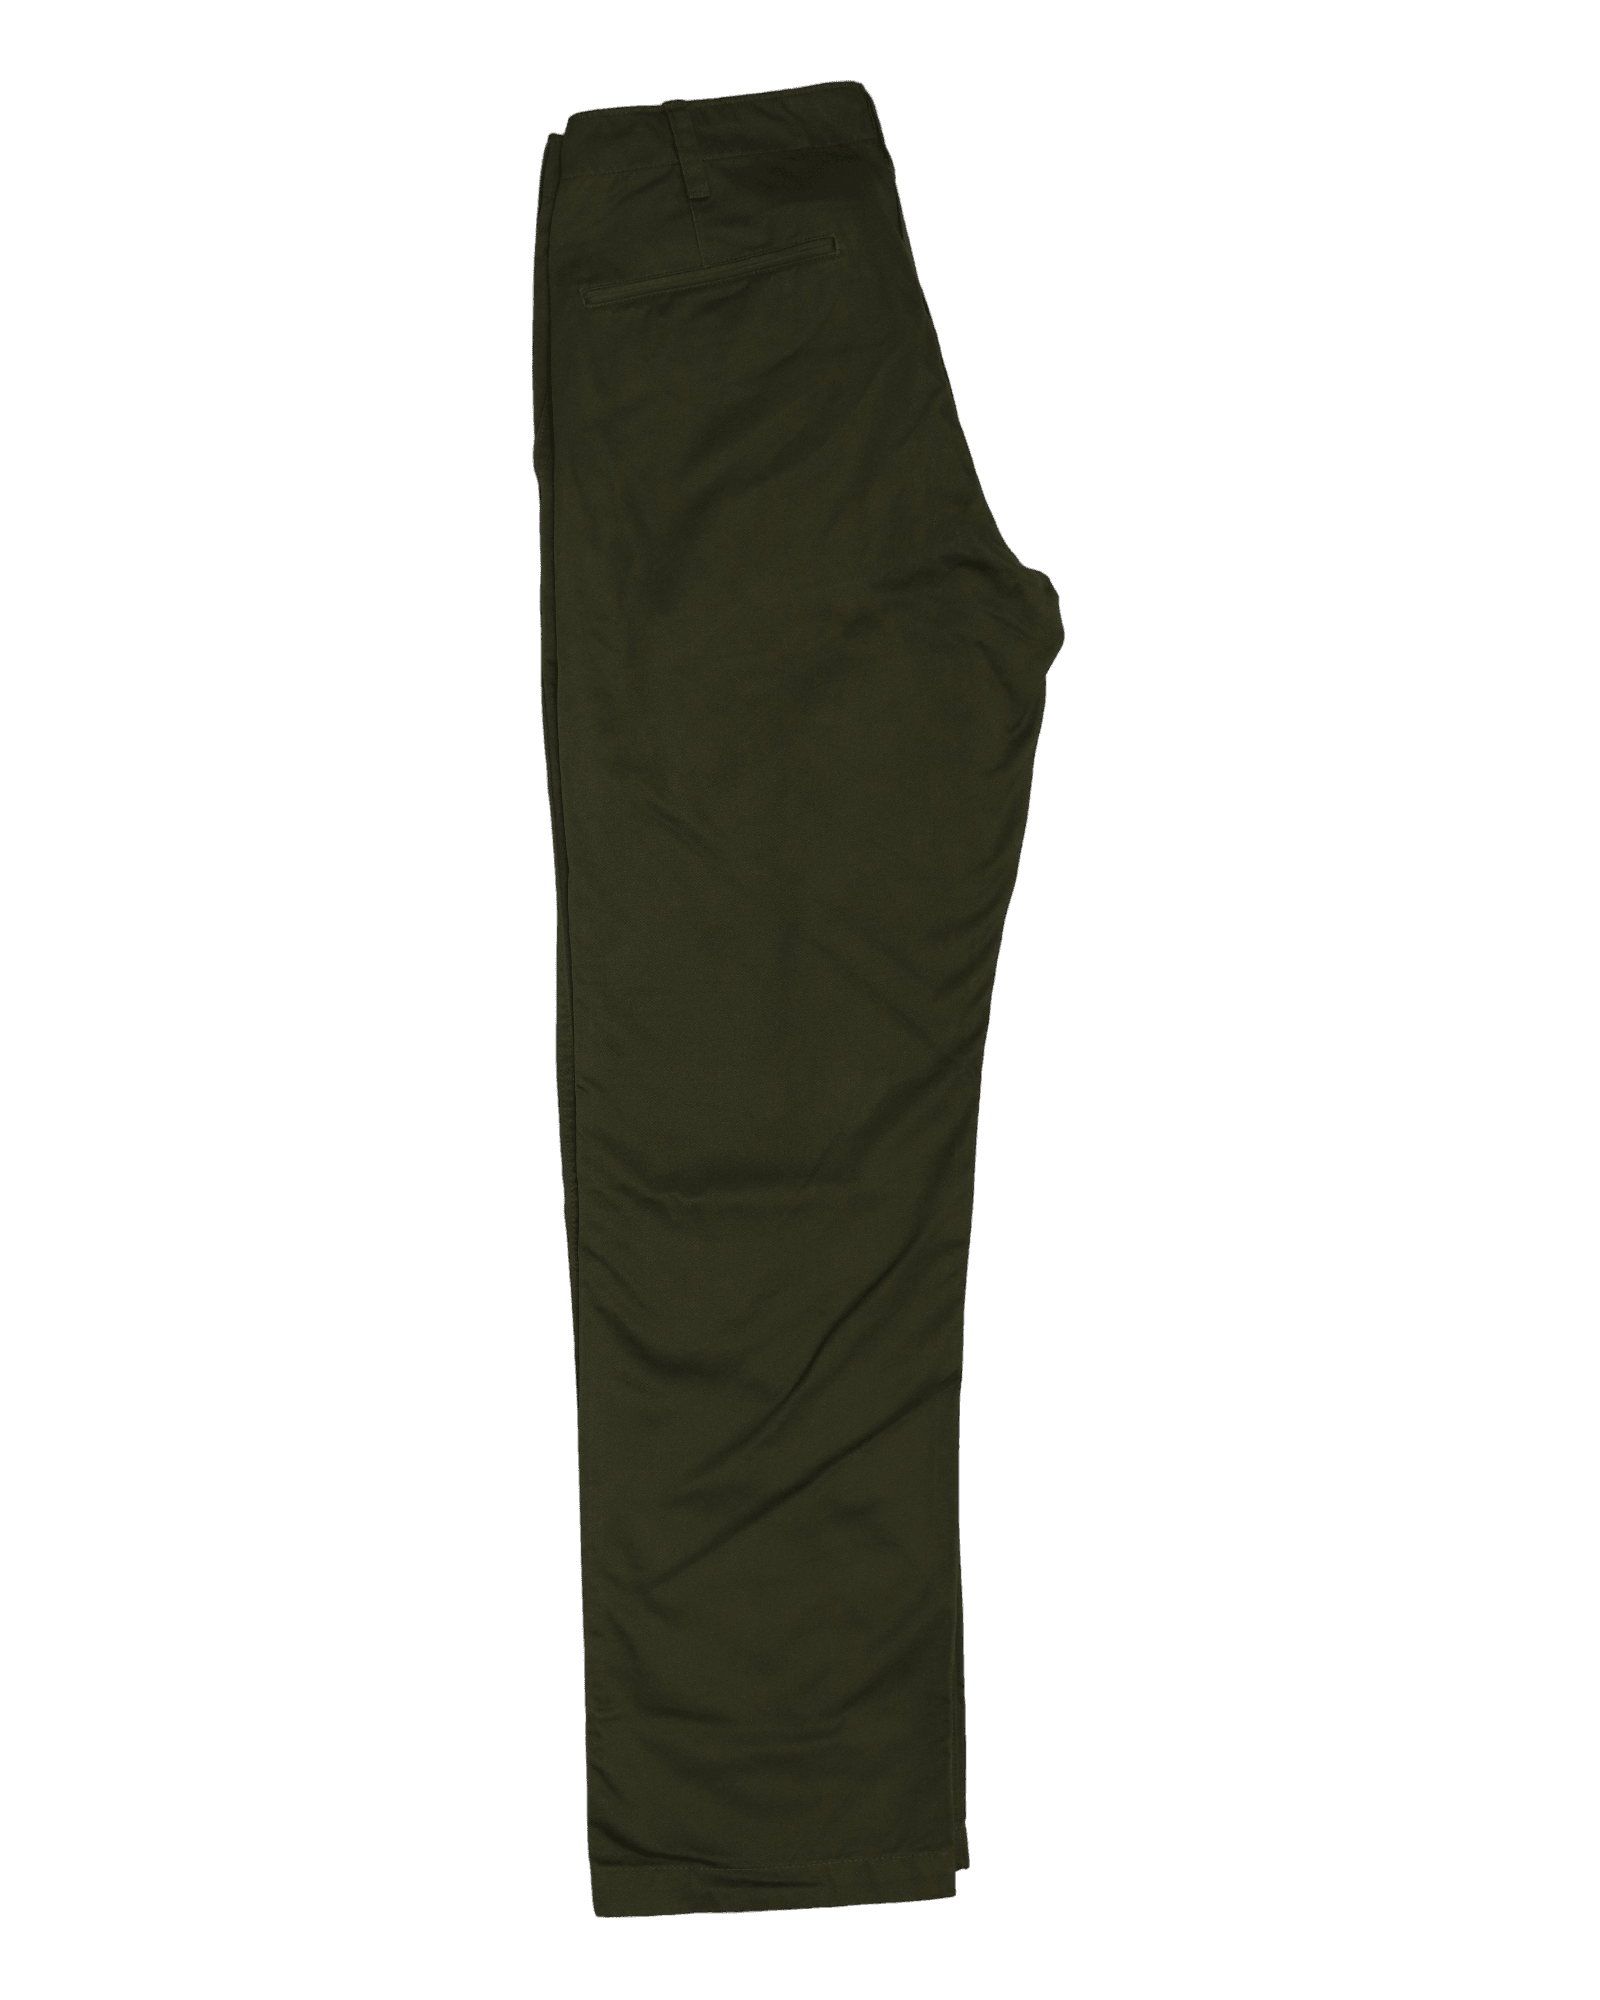 Uniqlo Mens Coton Pant - Apparel For Less